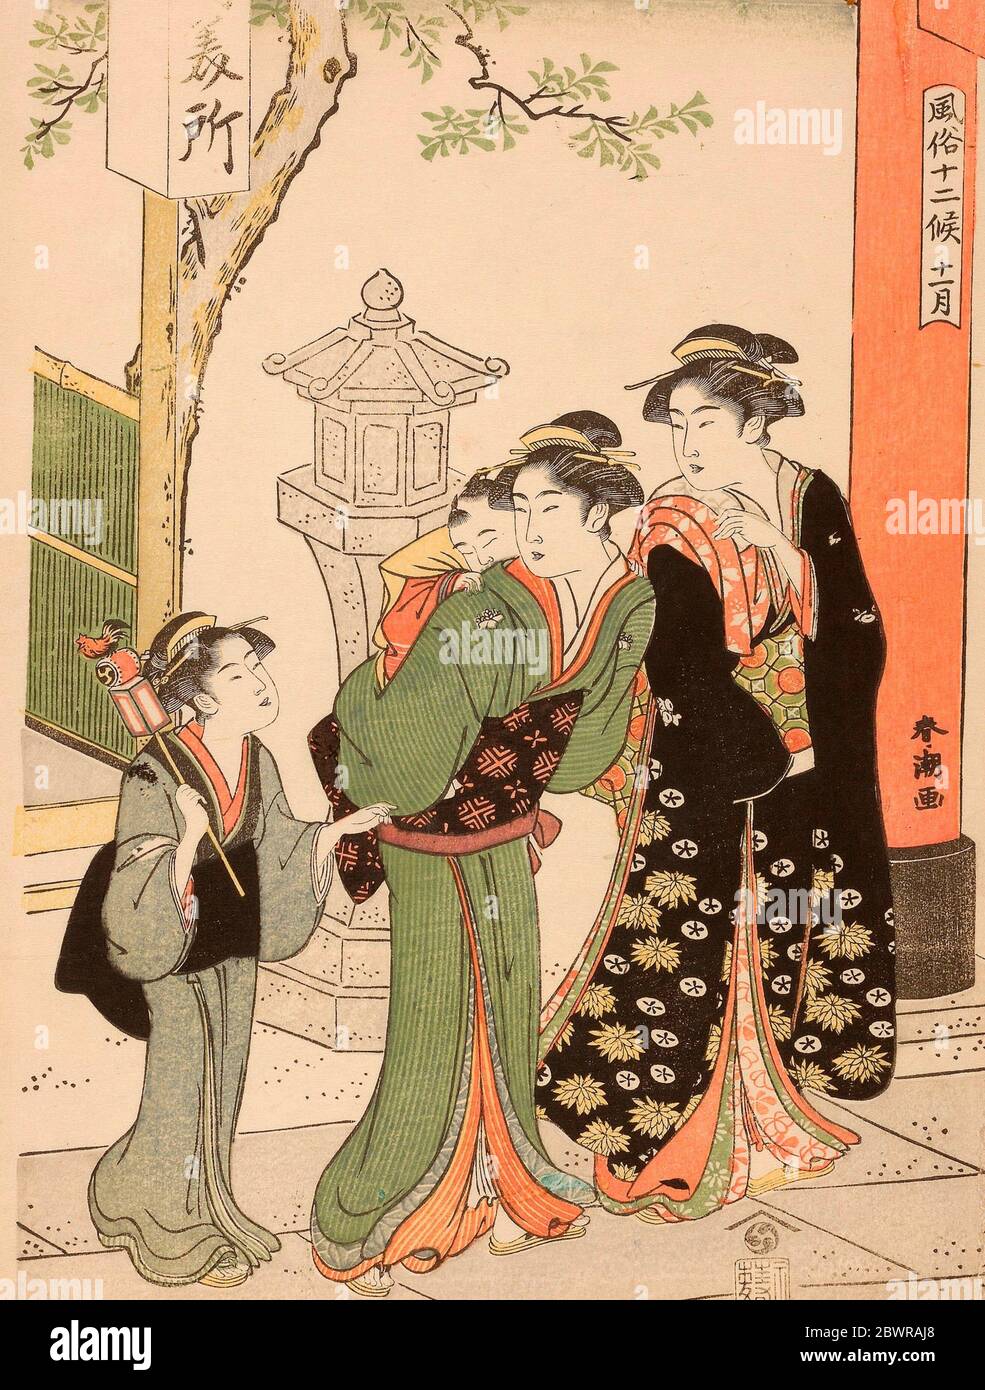 Author: Katsukawa Shunch. The Eleventh Month (Juichigatsu), from the series 'Popular Customs of the Twelve Months (Fuzoku juni ko)' - c. 1780/1801 - Stock Photo